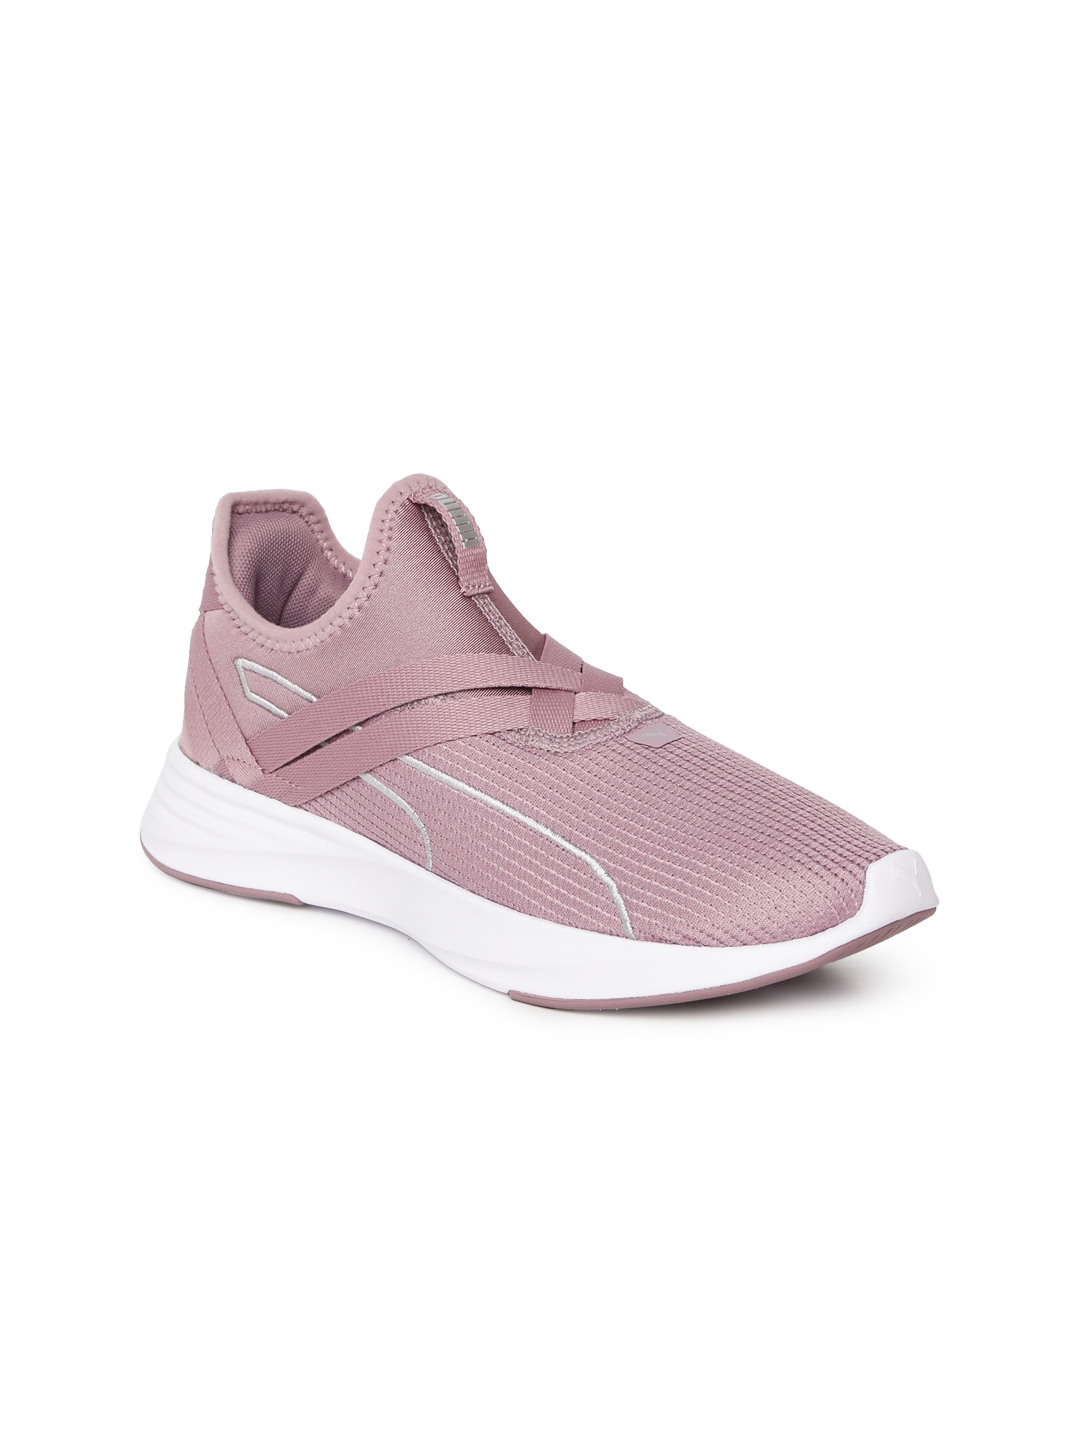 pink puma womens shoes